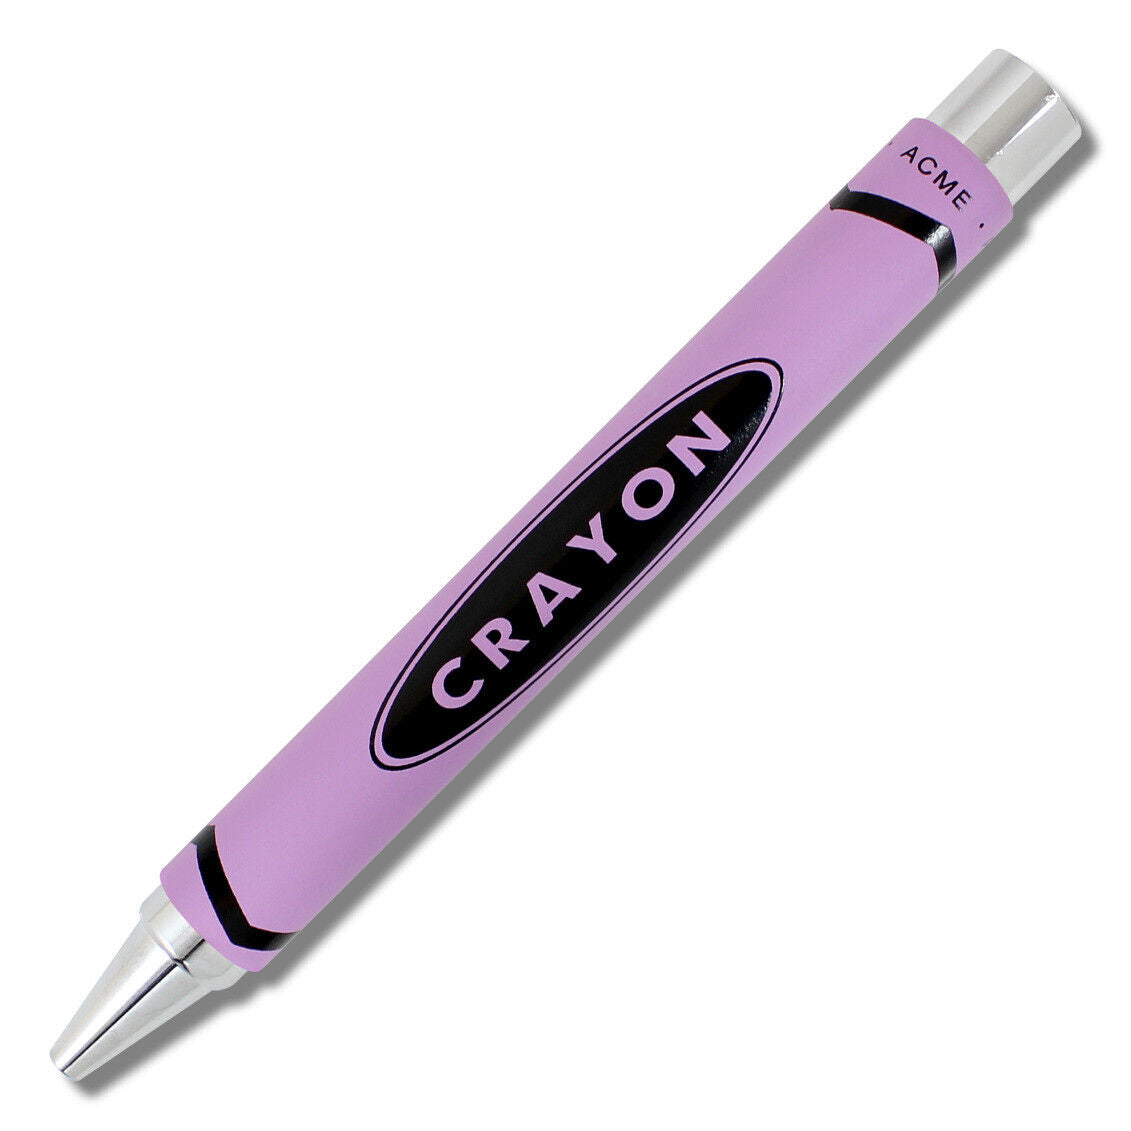 ACME Studio "Crayon Chrome Purple” Twist Rollerball By ADRIAN OLABUENAGA - NEW